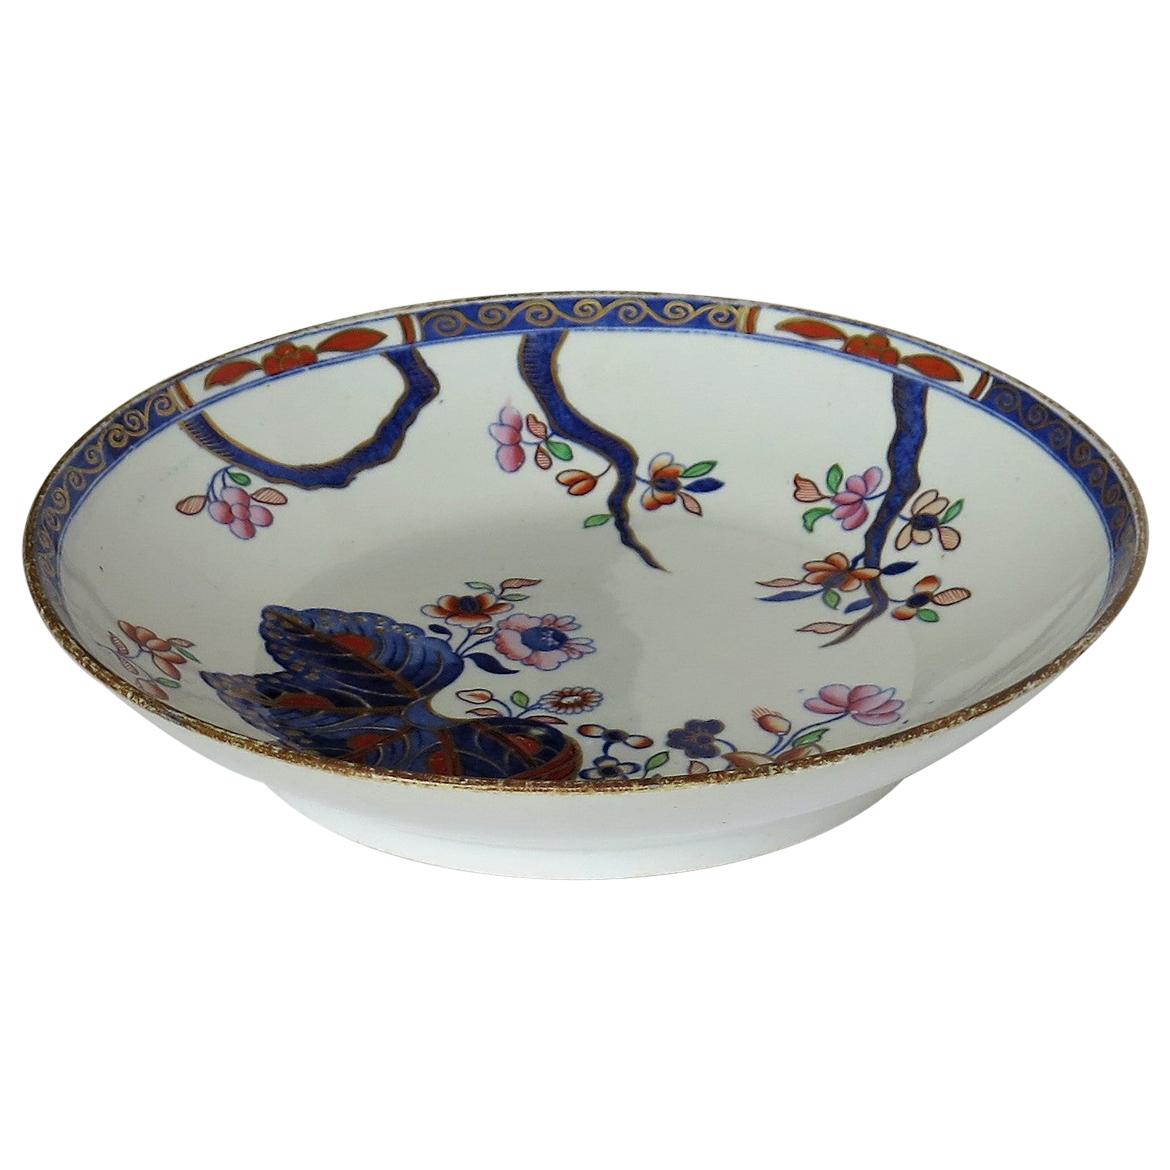 Georgian Spode Deep Plate or Dish Porcelain Tobacco Leaf Pattern 2061 circa 1805